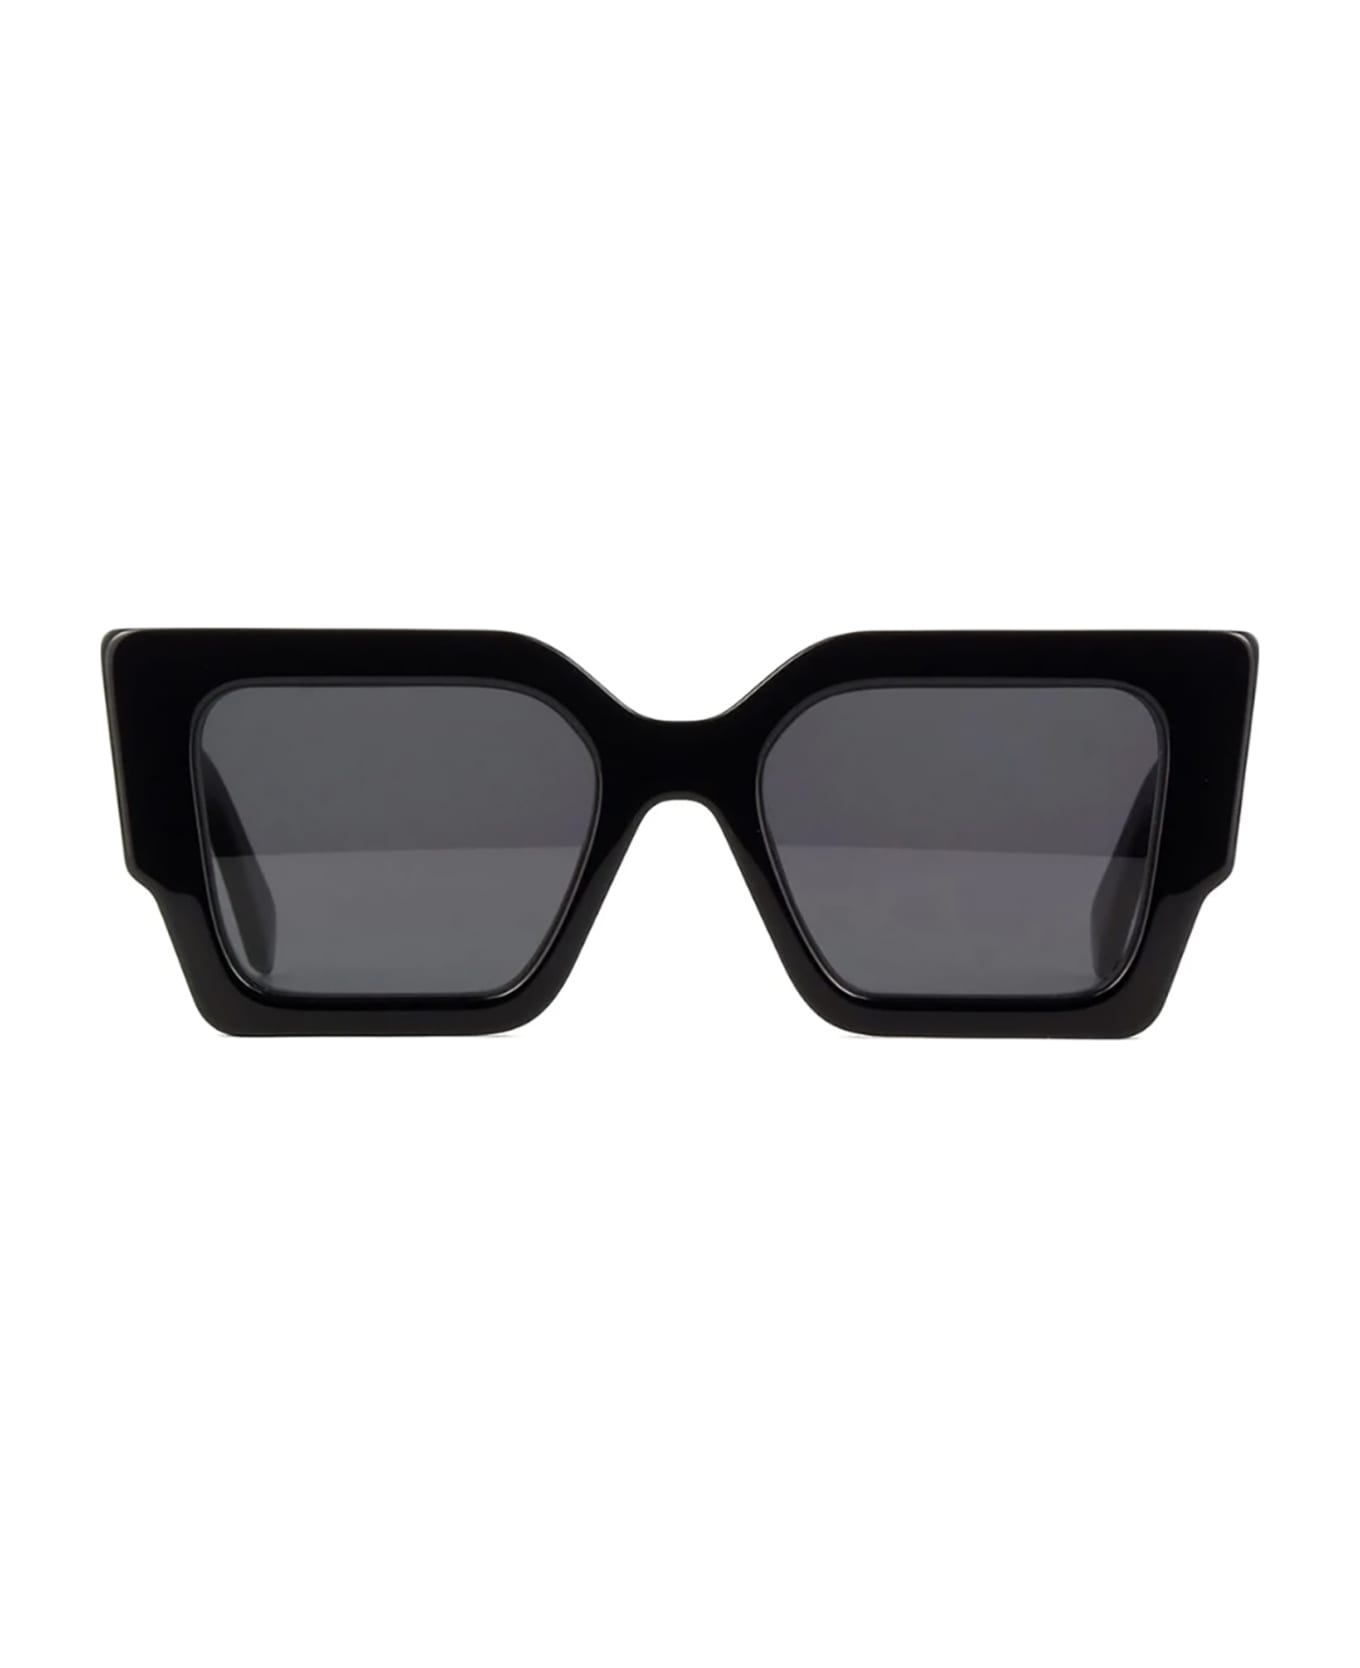 Off-White OERI128 CATALINA Sunglasses - Black